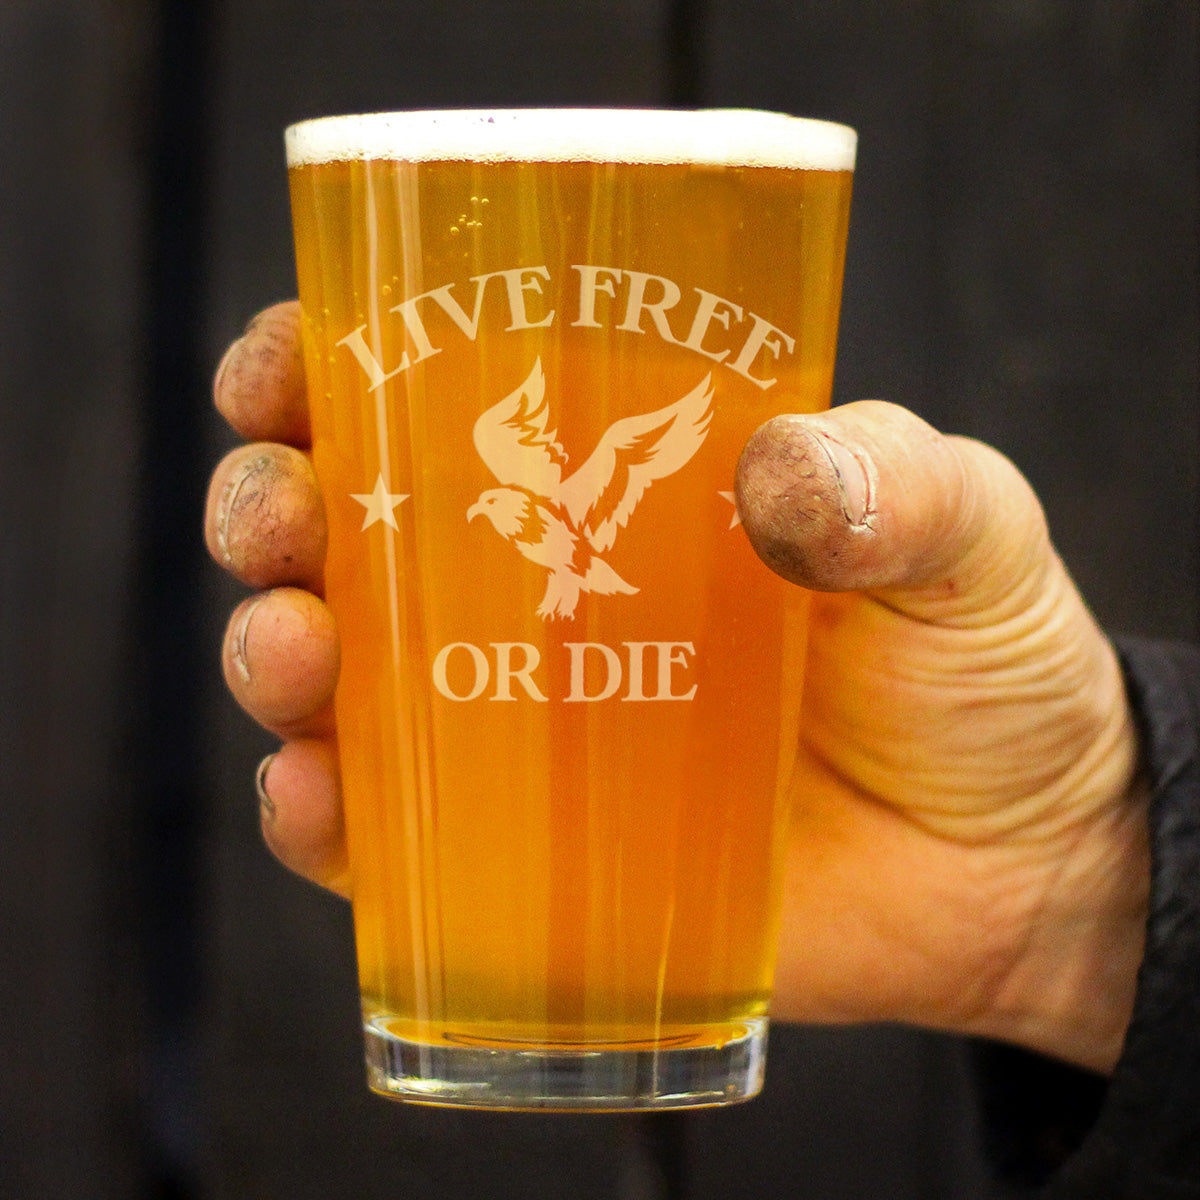 Live Free Or Die - American Patriotic Pint Glass Gift for Beer Drinking Men &amp; Women - 16 oz Glasses